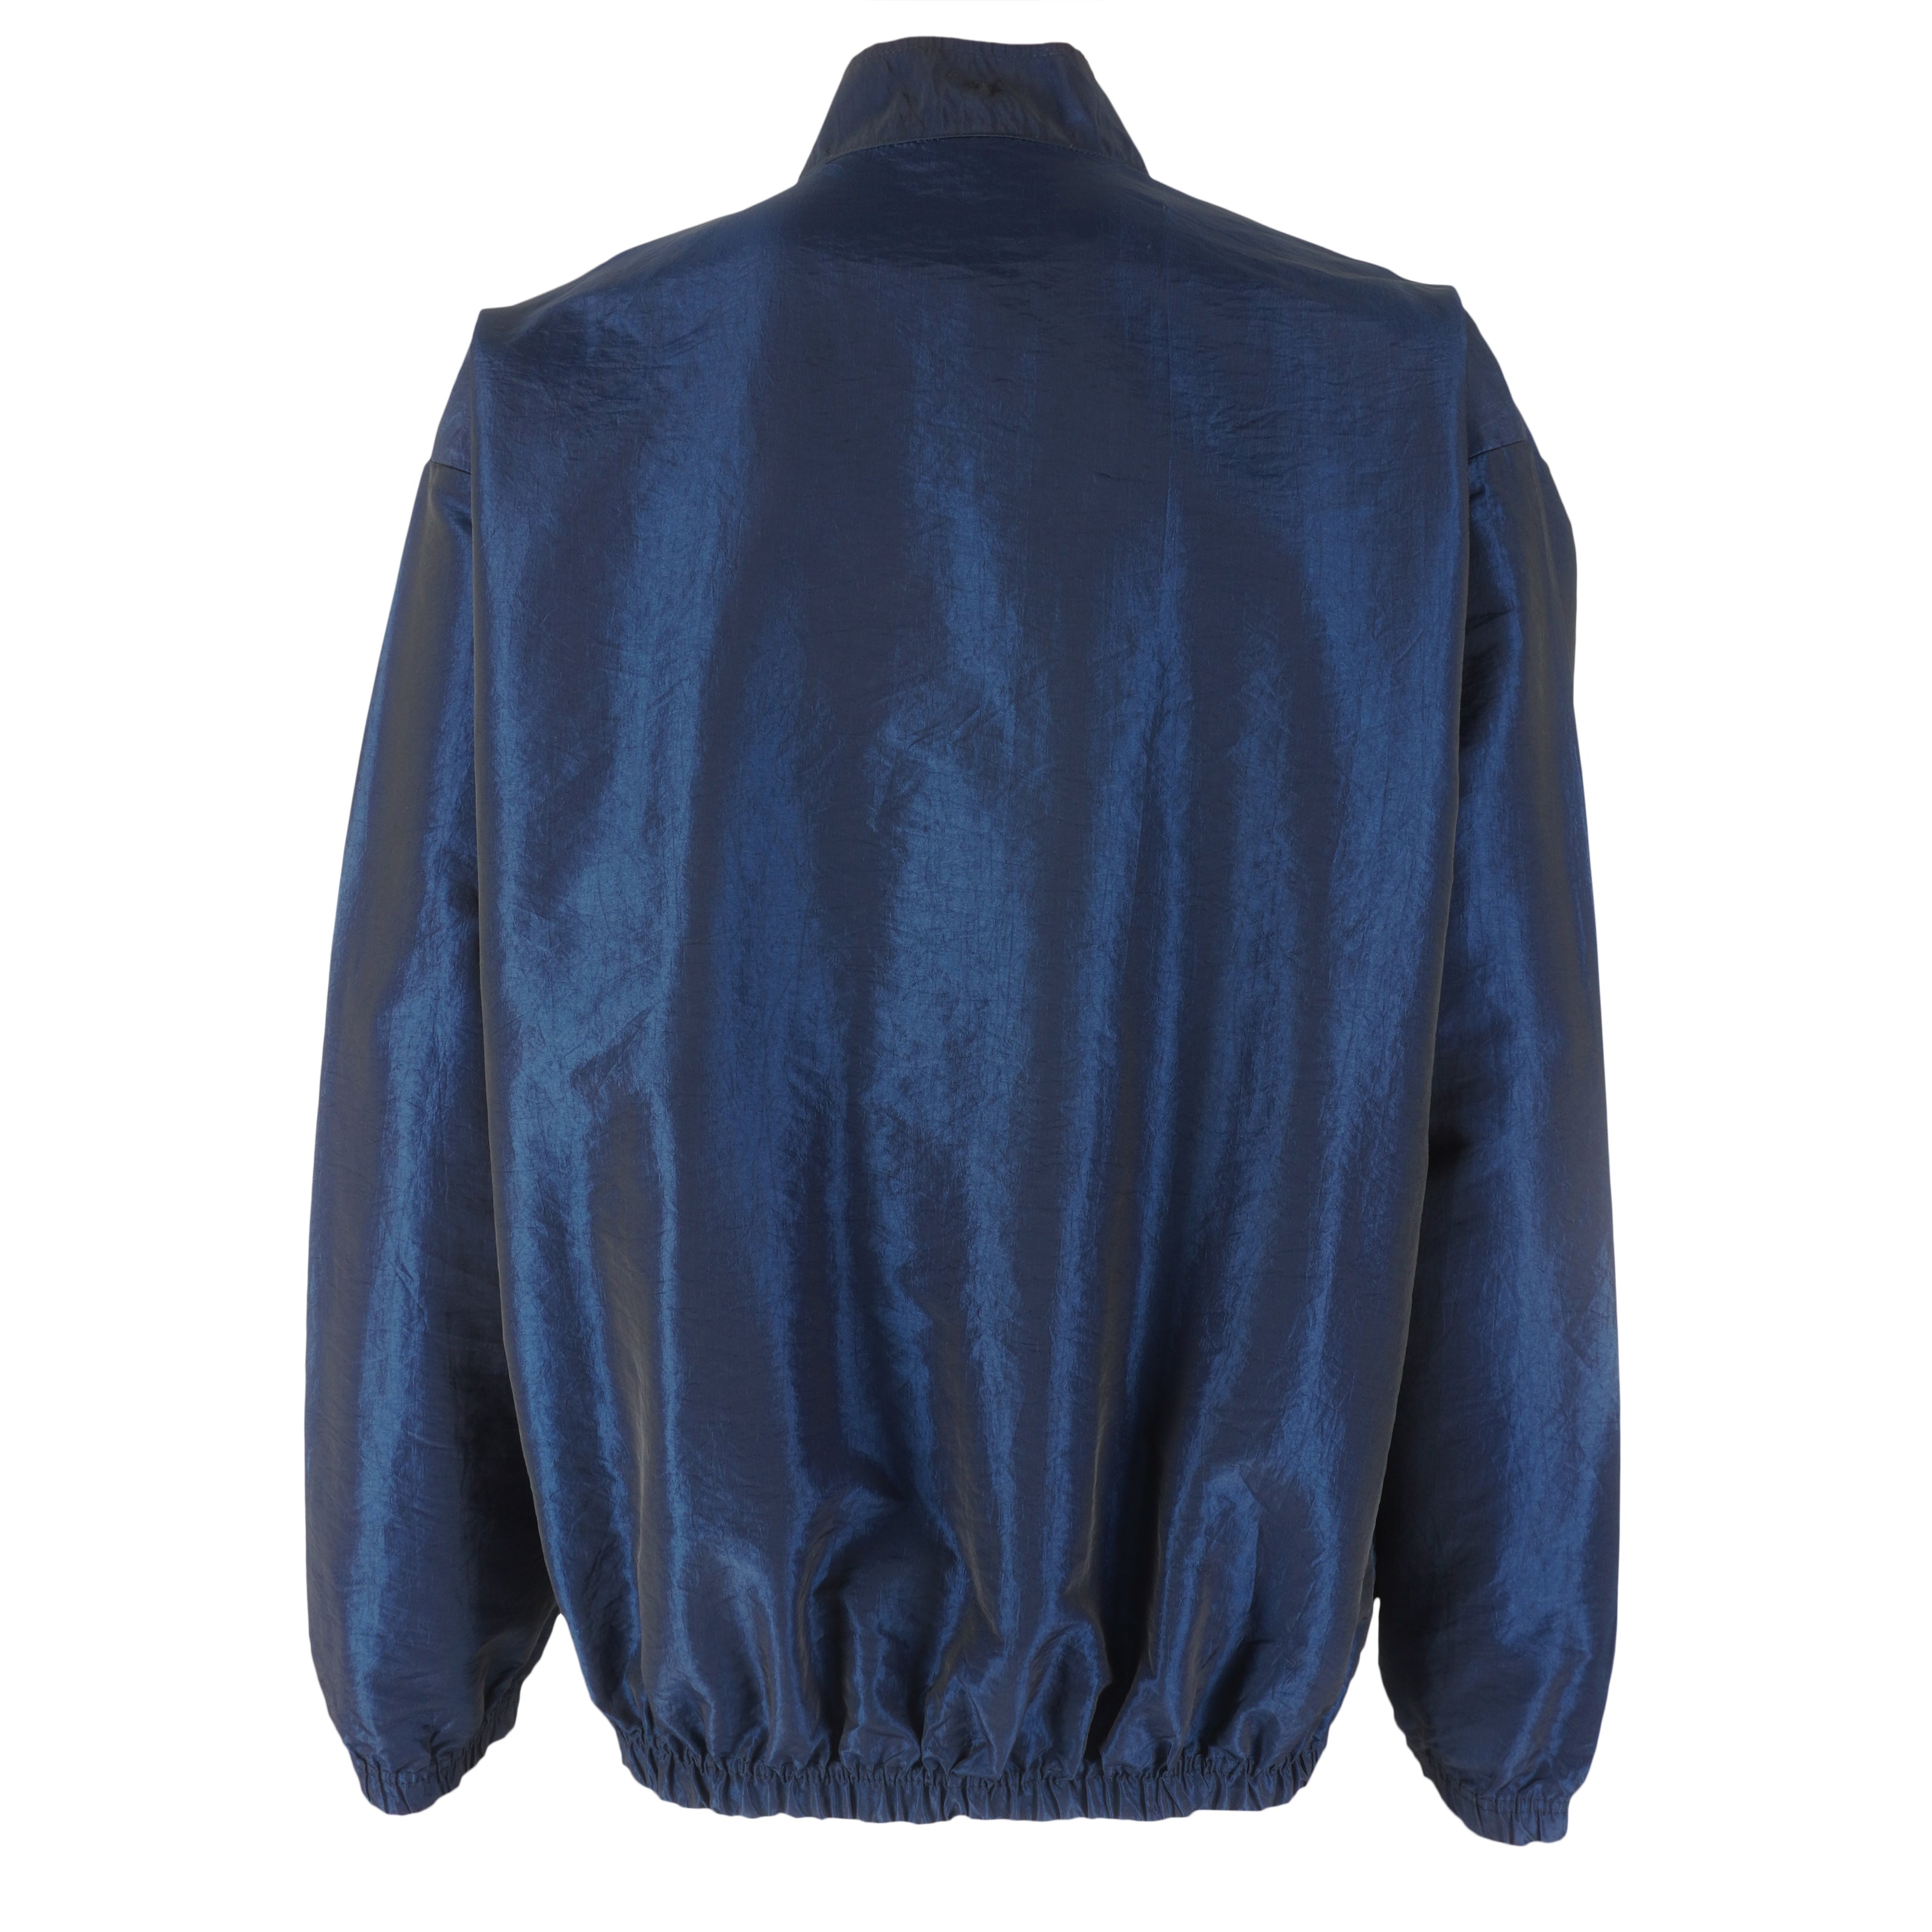 Vintage St. Louis Blues NHL Jacket by Nutmeg, Men's Fashion, Coats